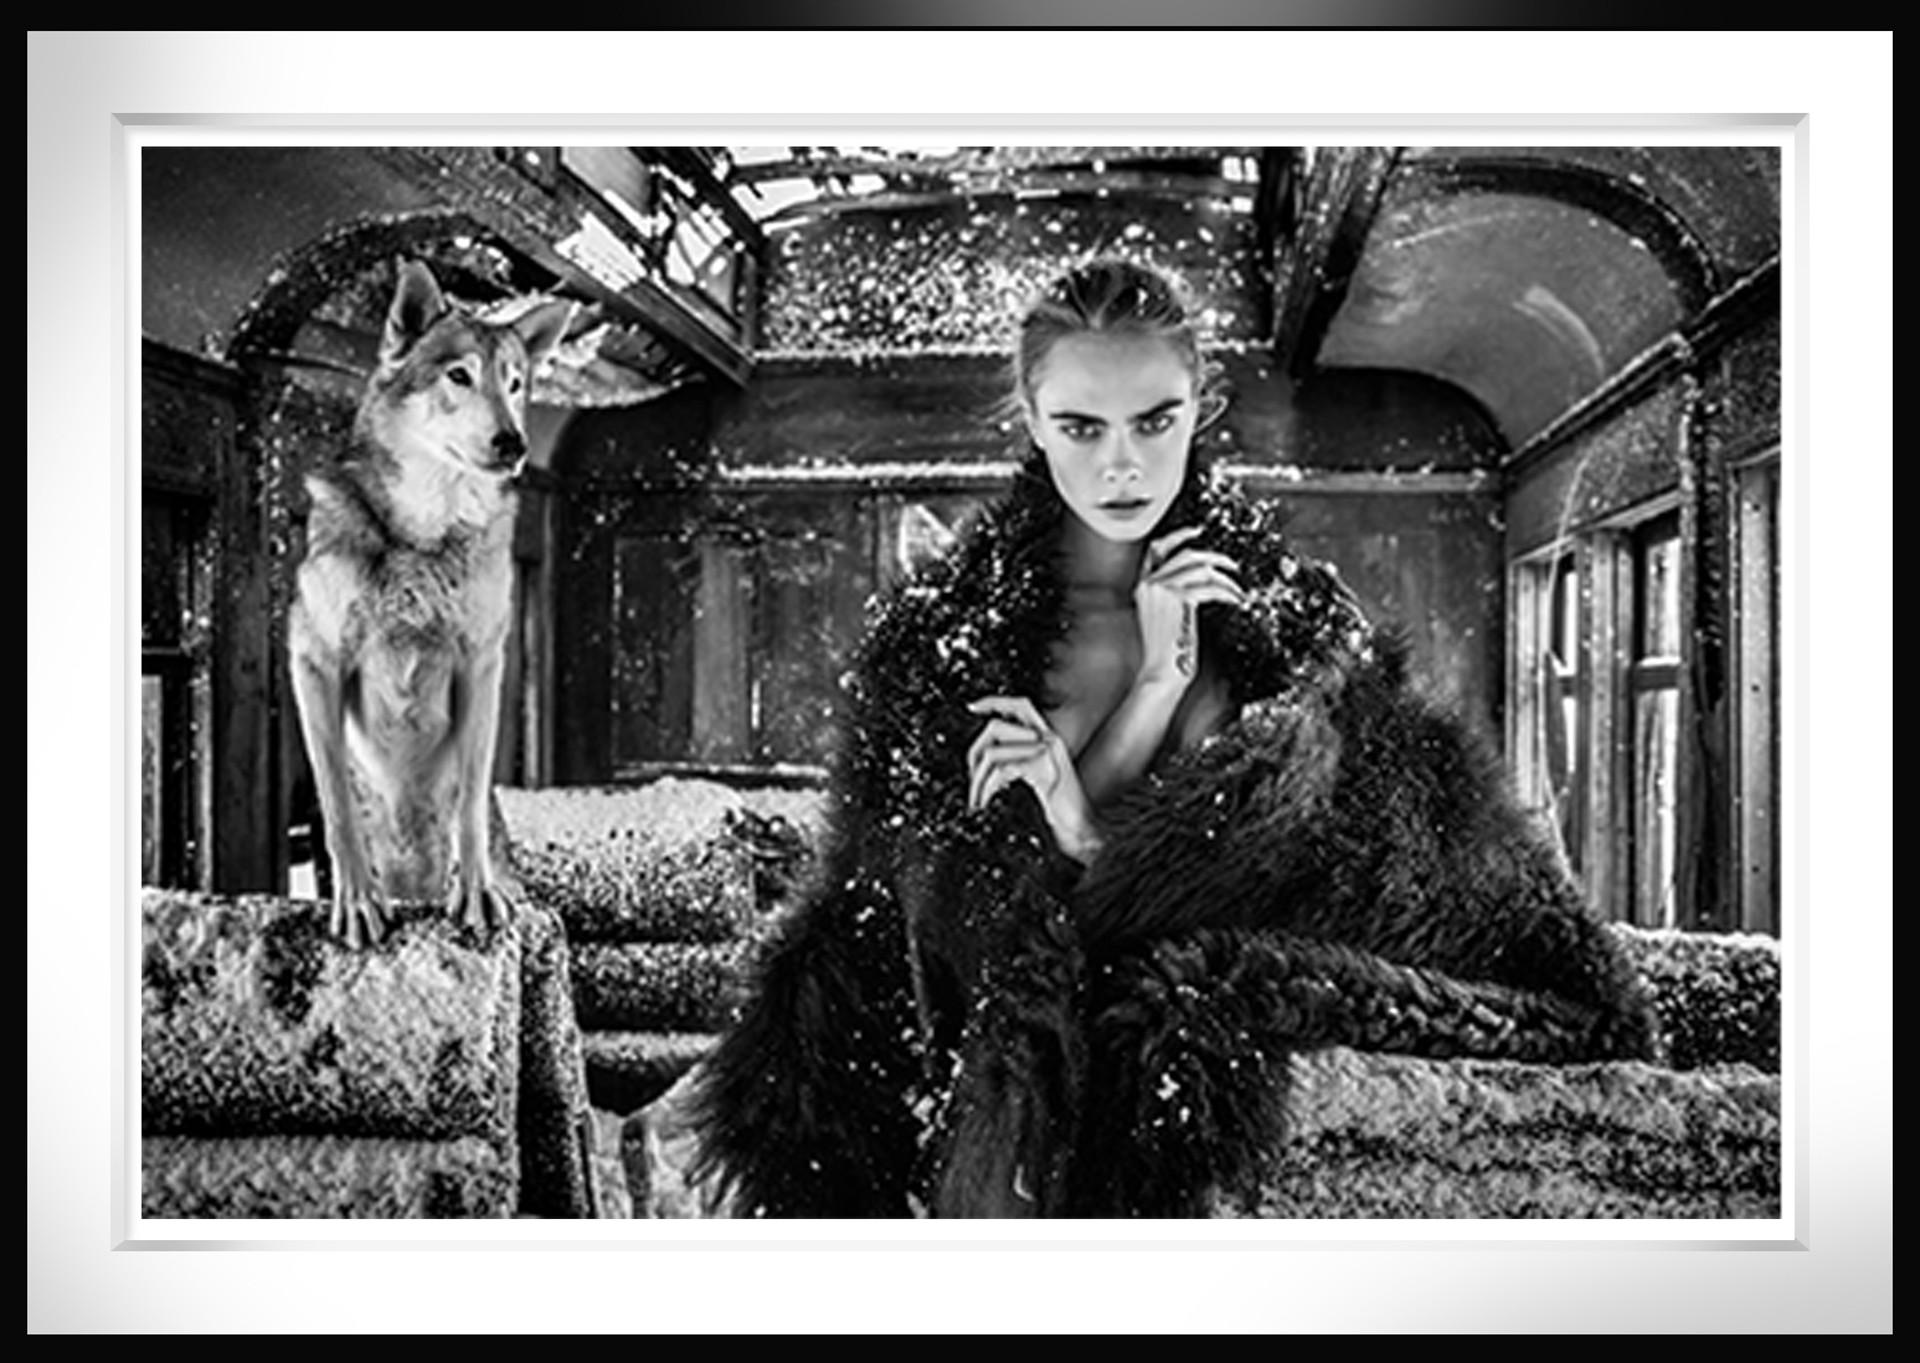 The Girl on the Train by David Yarrow